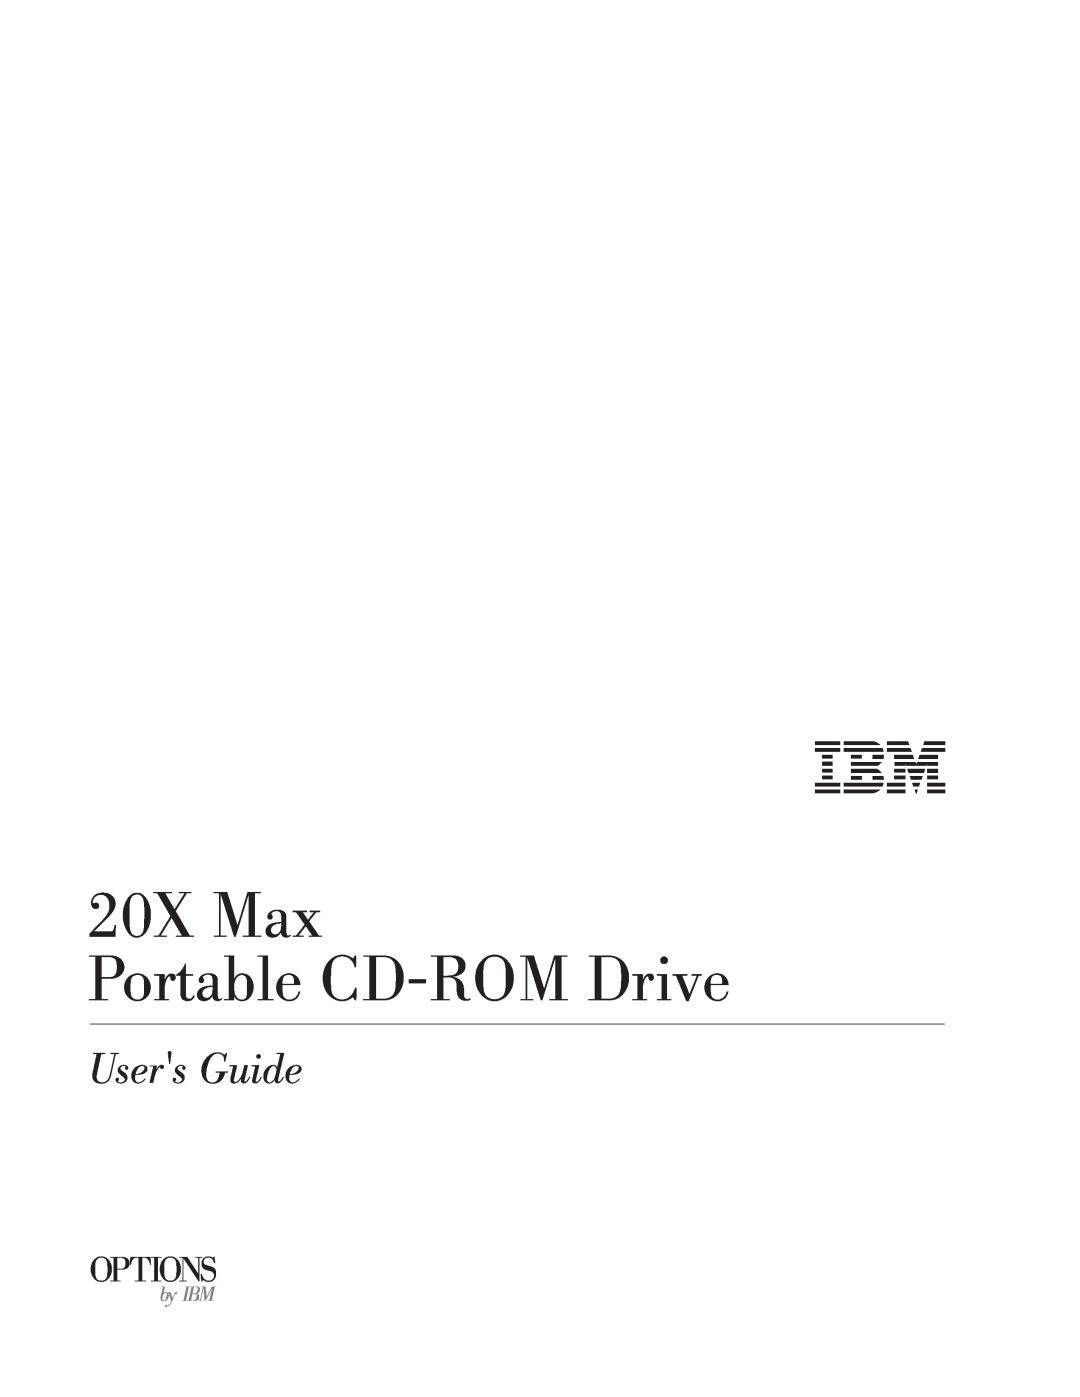 Lenovo 4304493 manual 20X Max Portable CD-ROM Drive, Users Guide, Options, by IBM 